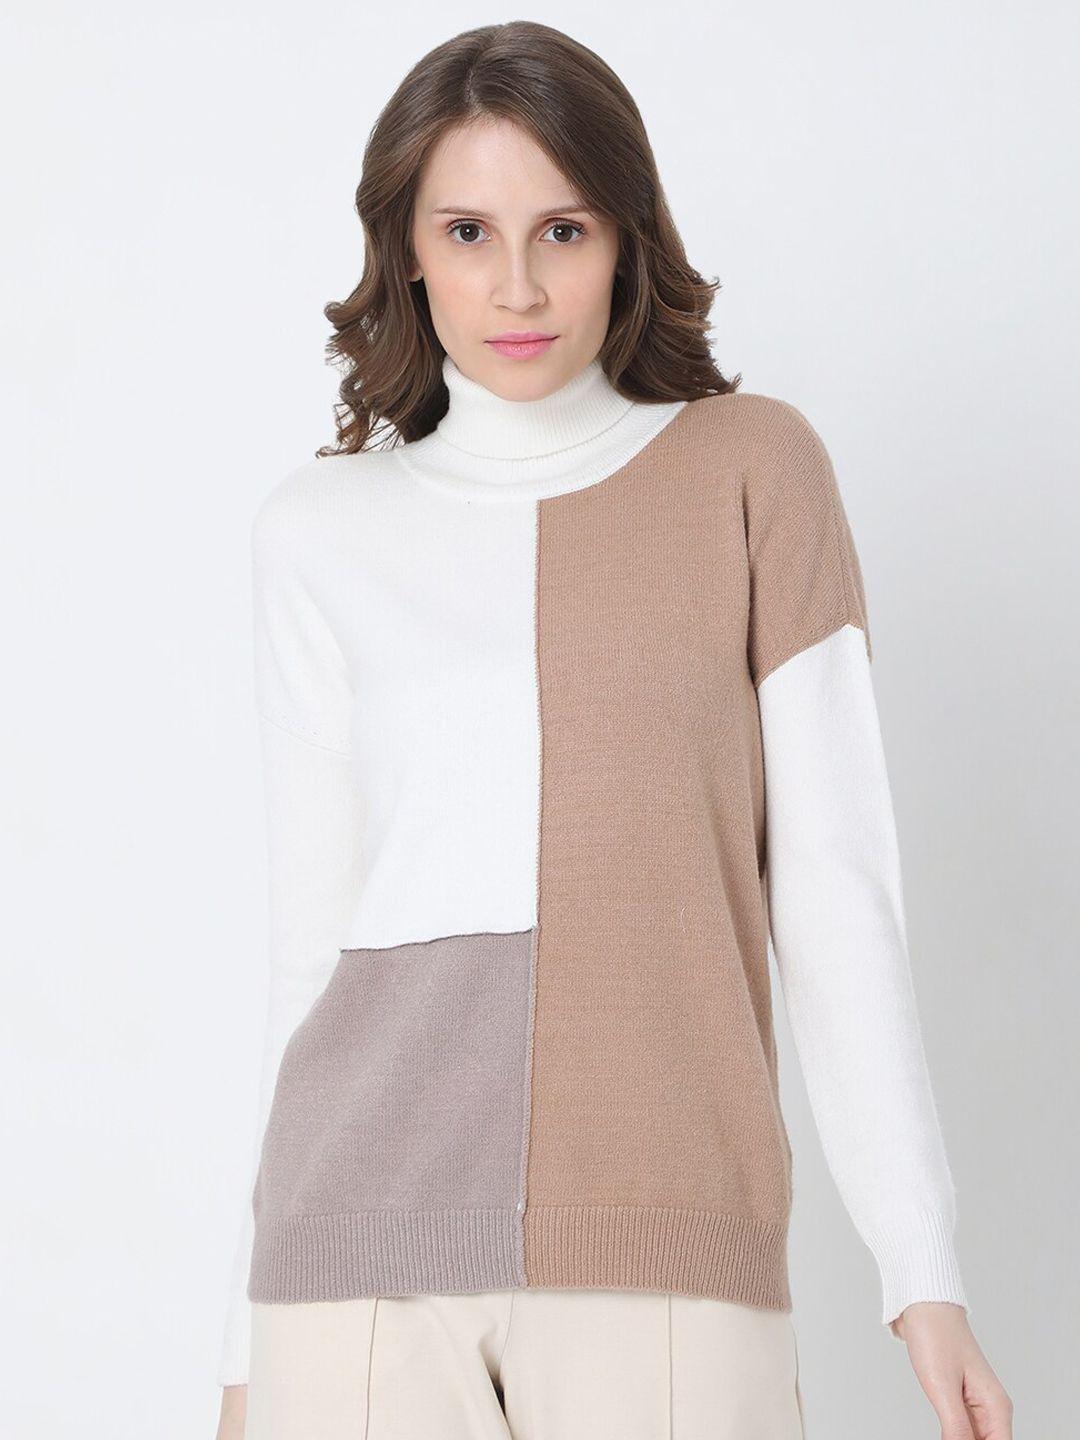 vero-moda-women-white-&-brown-colourblocked-pullover